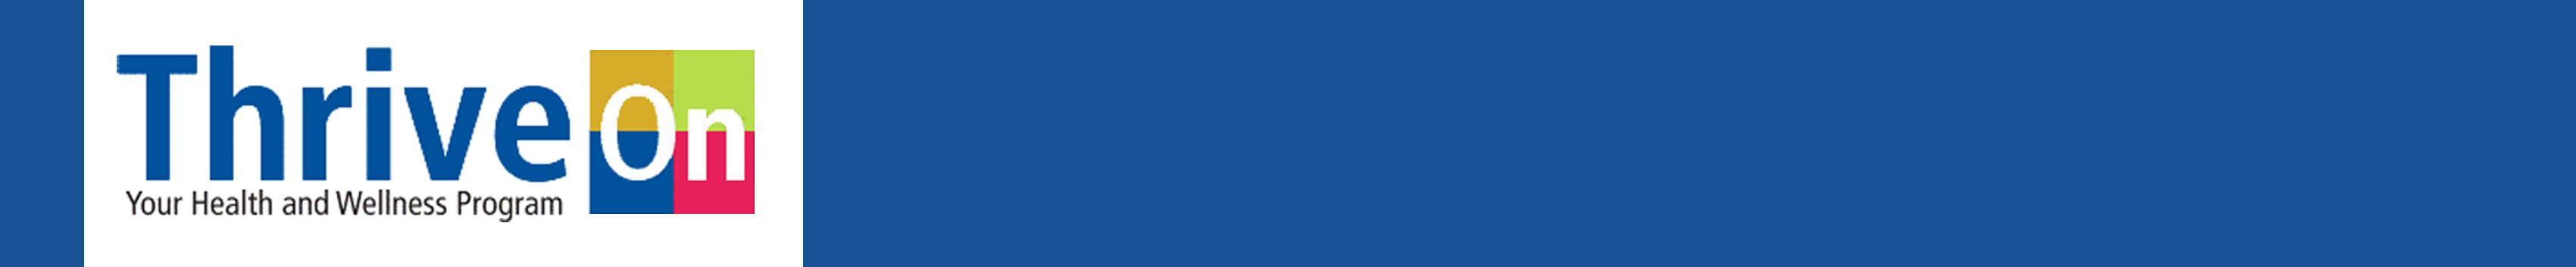 Bluebar with Thriveon logo